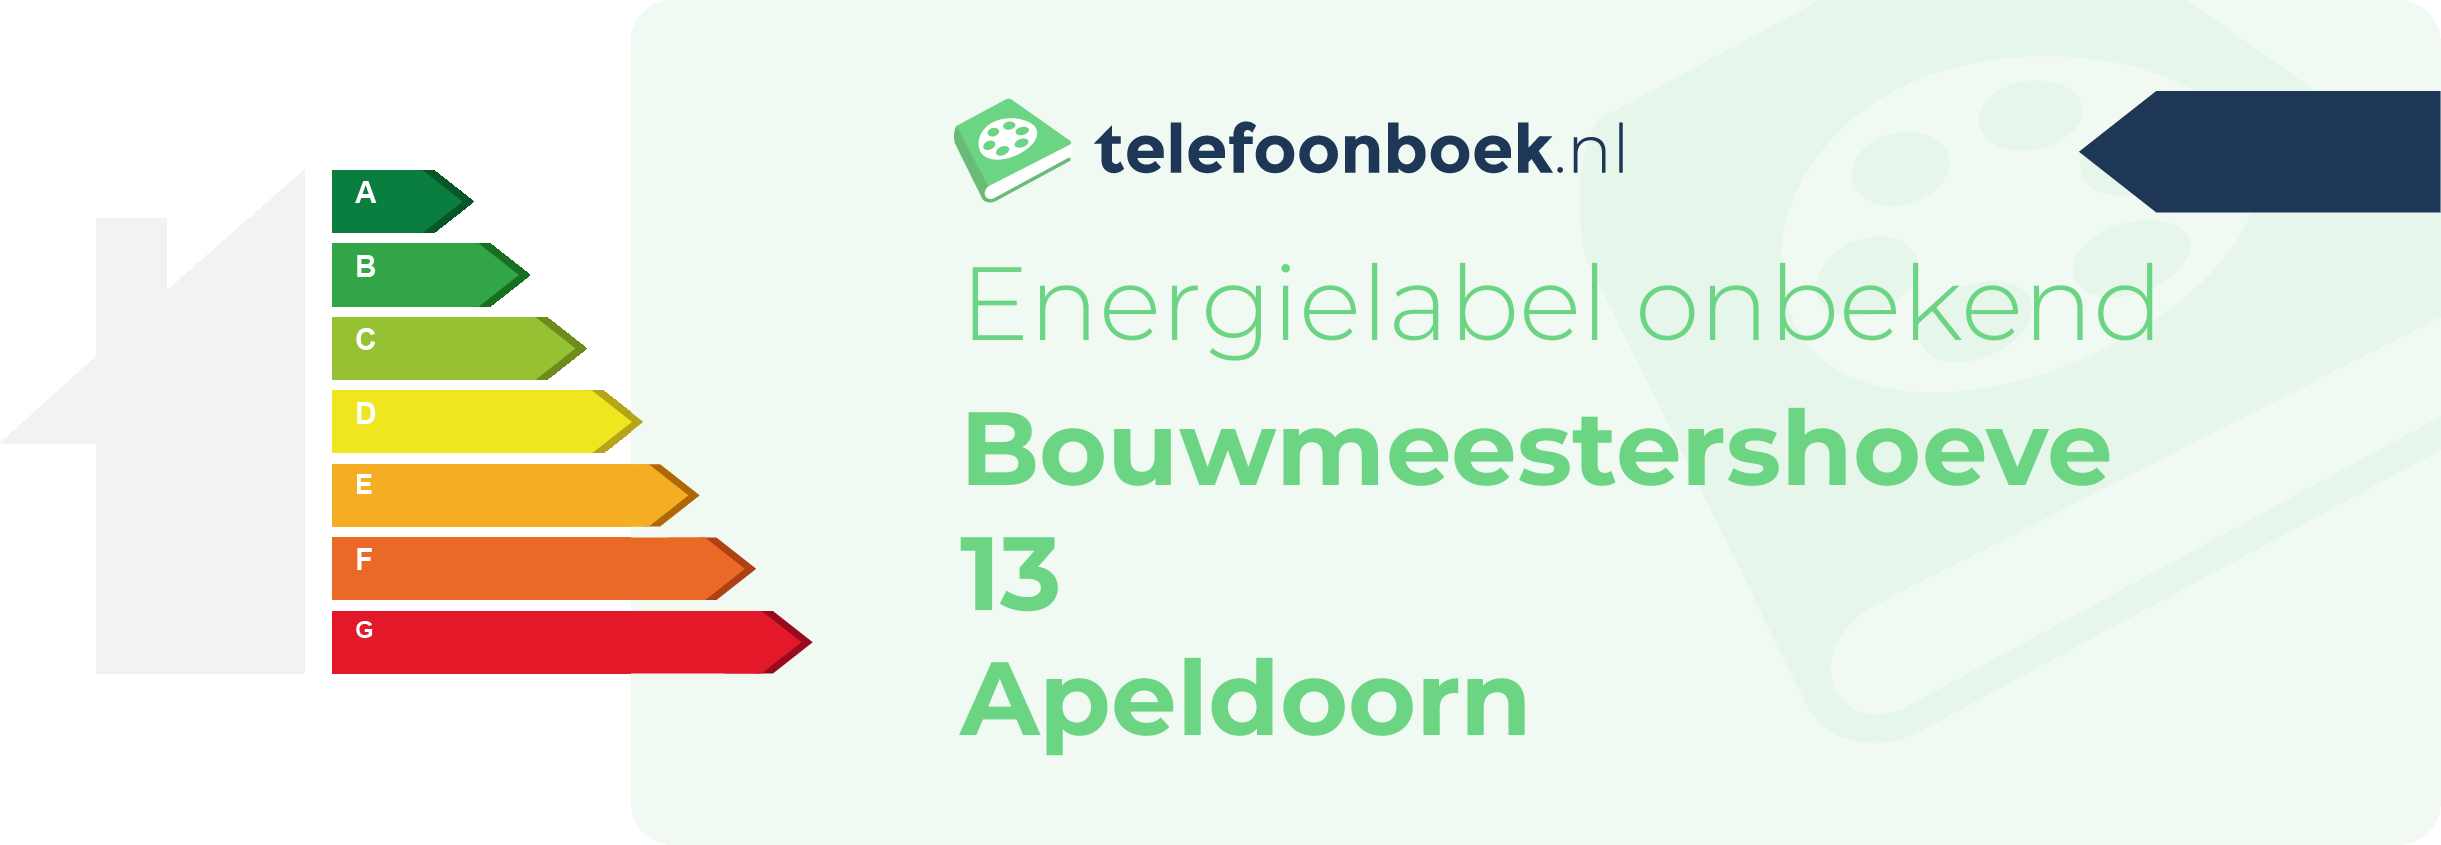 Energielabel Bouwmeestershoeve 13 Apeldoorn